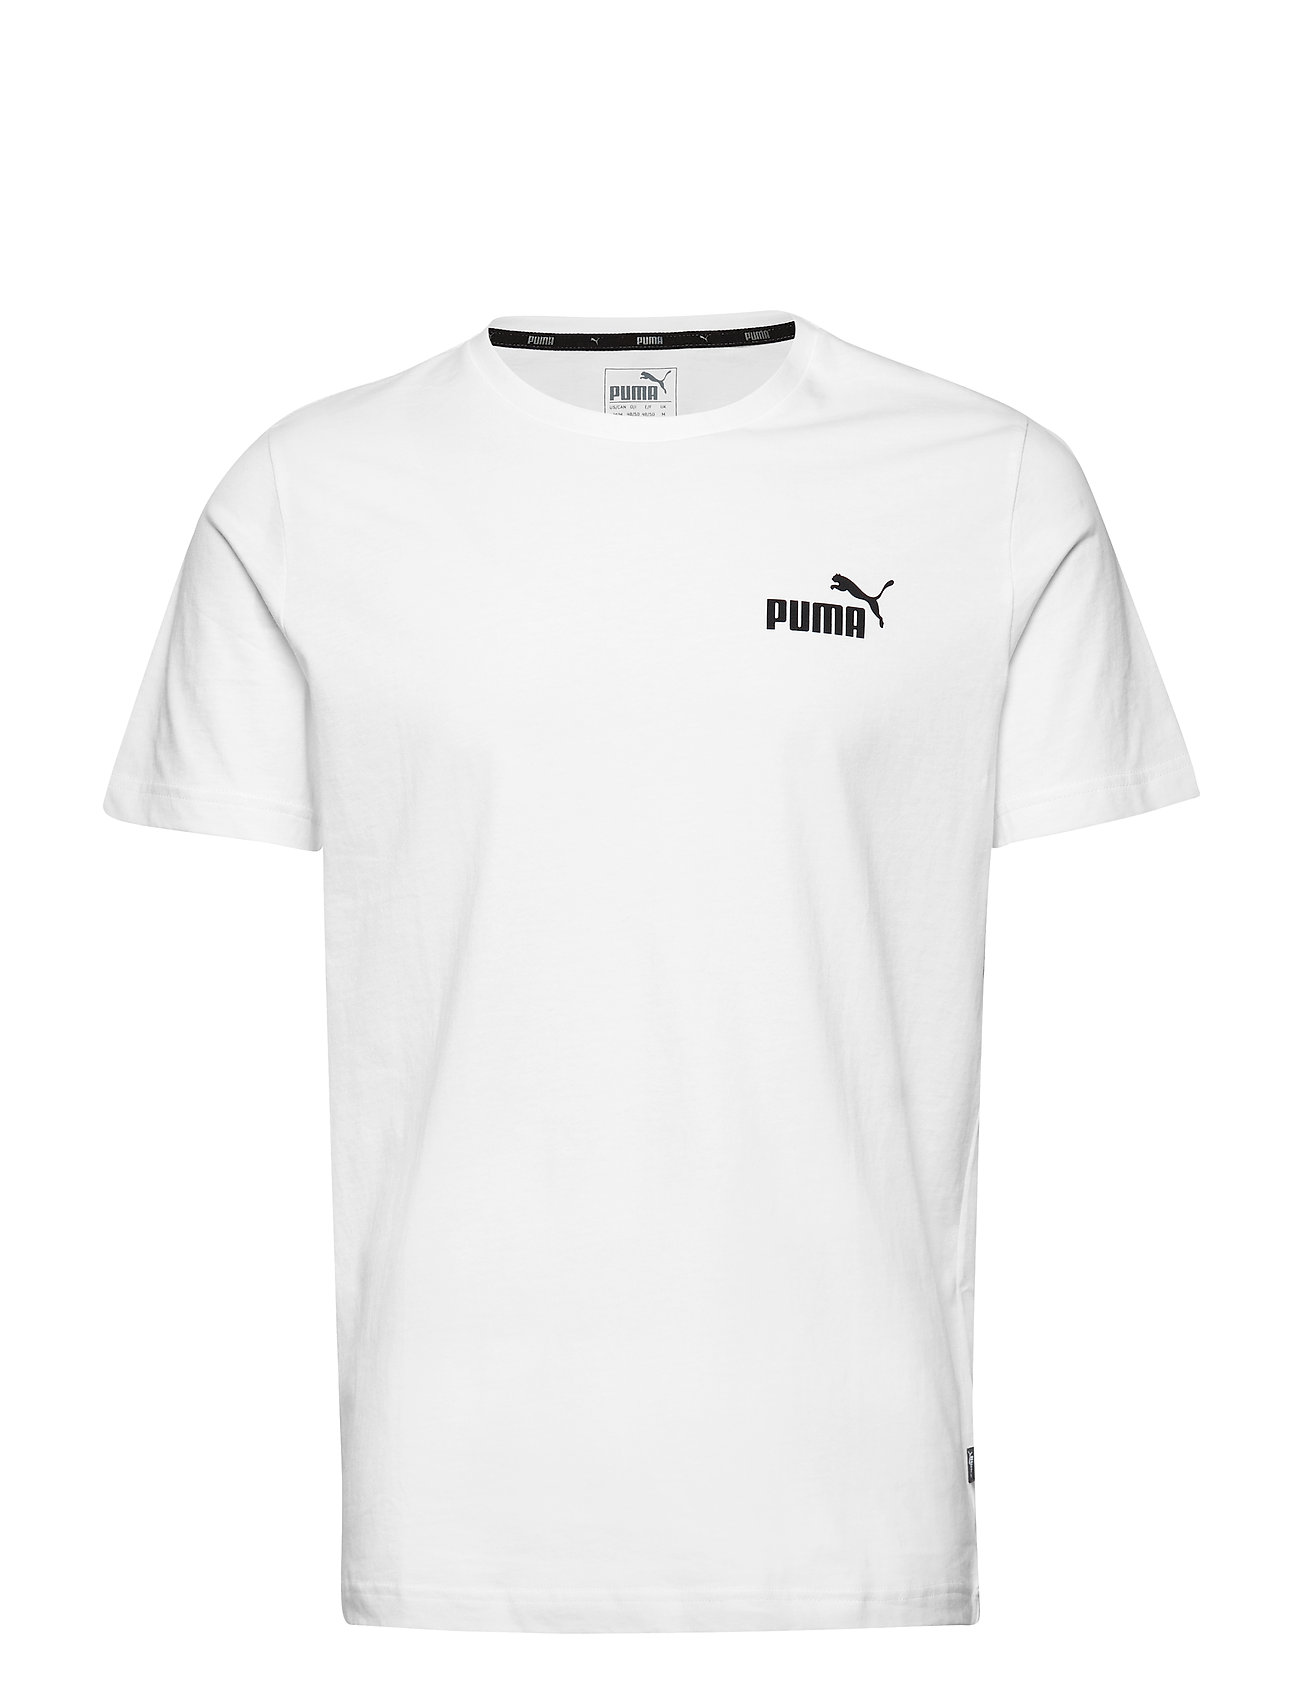 puma white t shirts